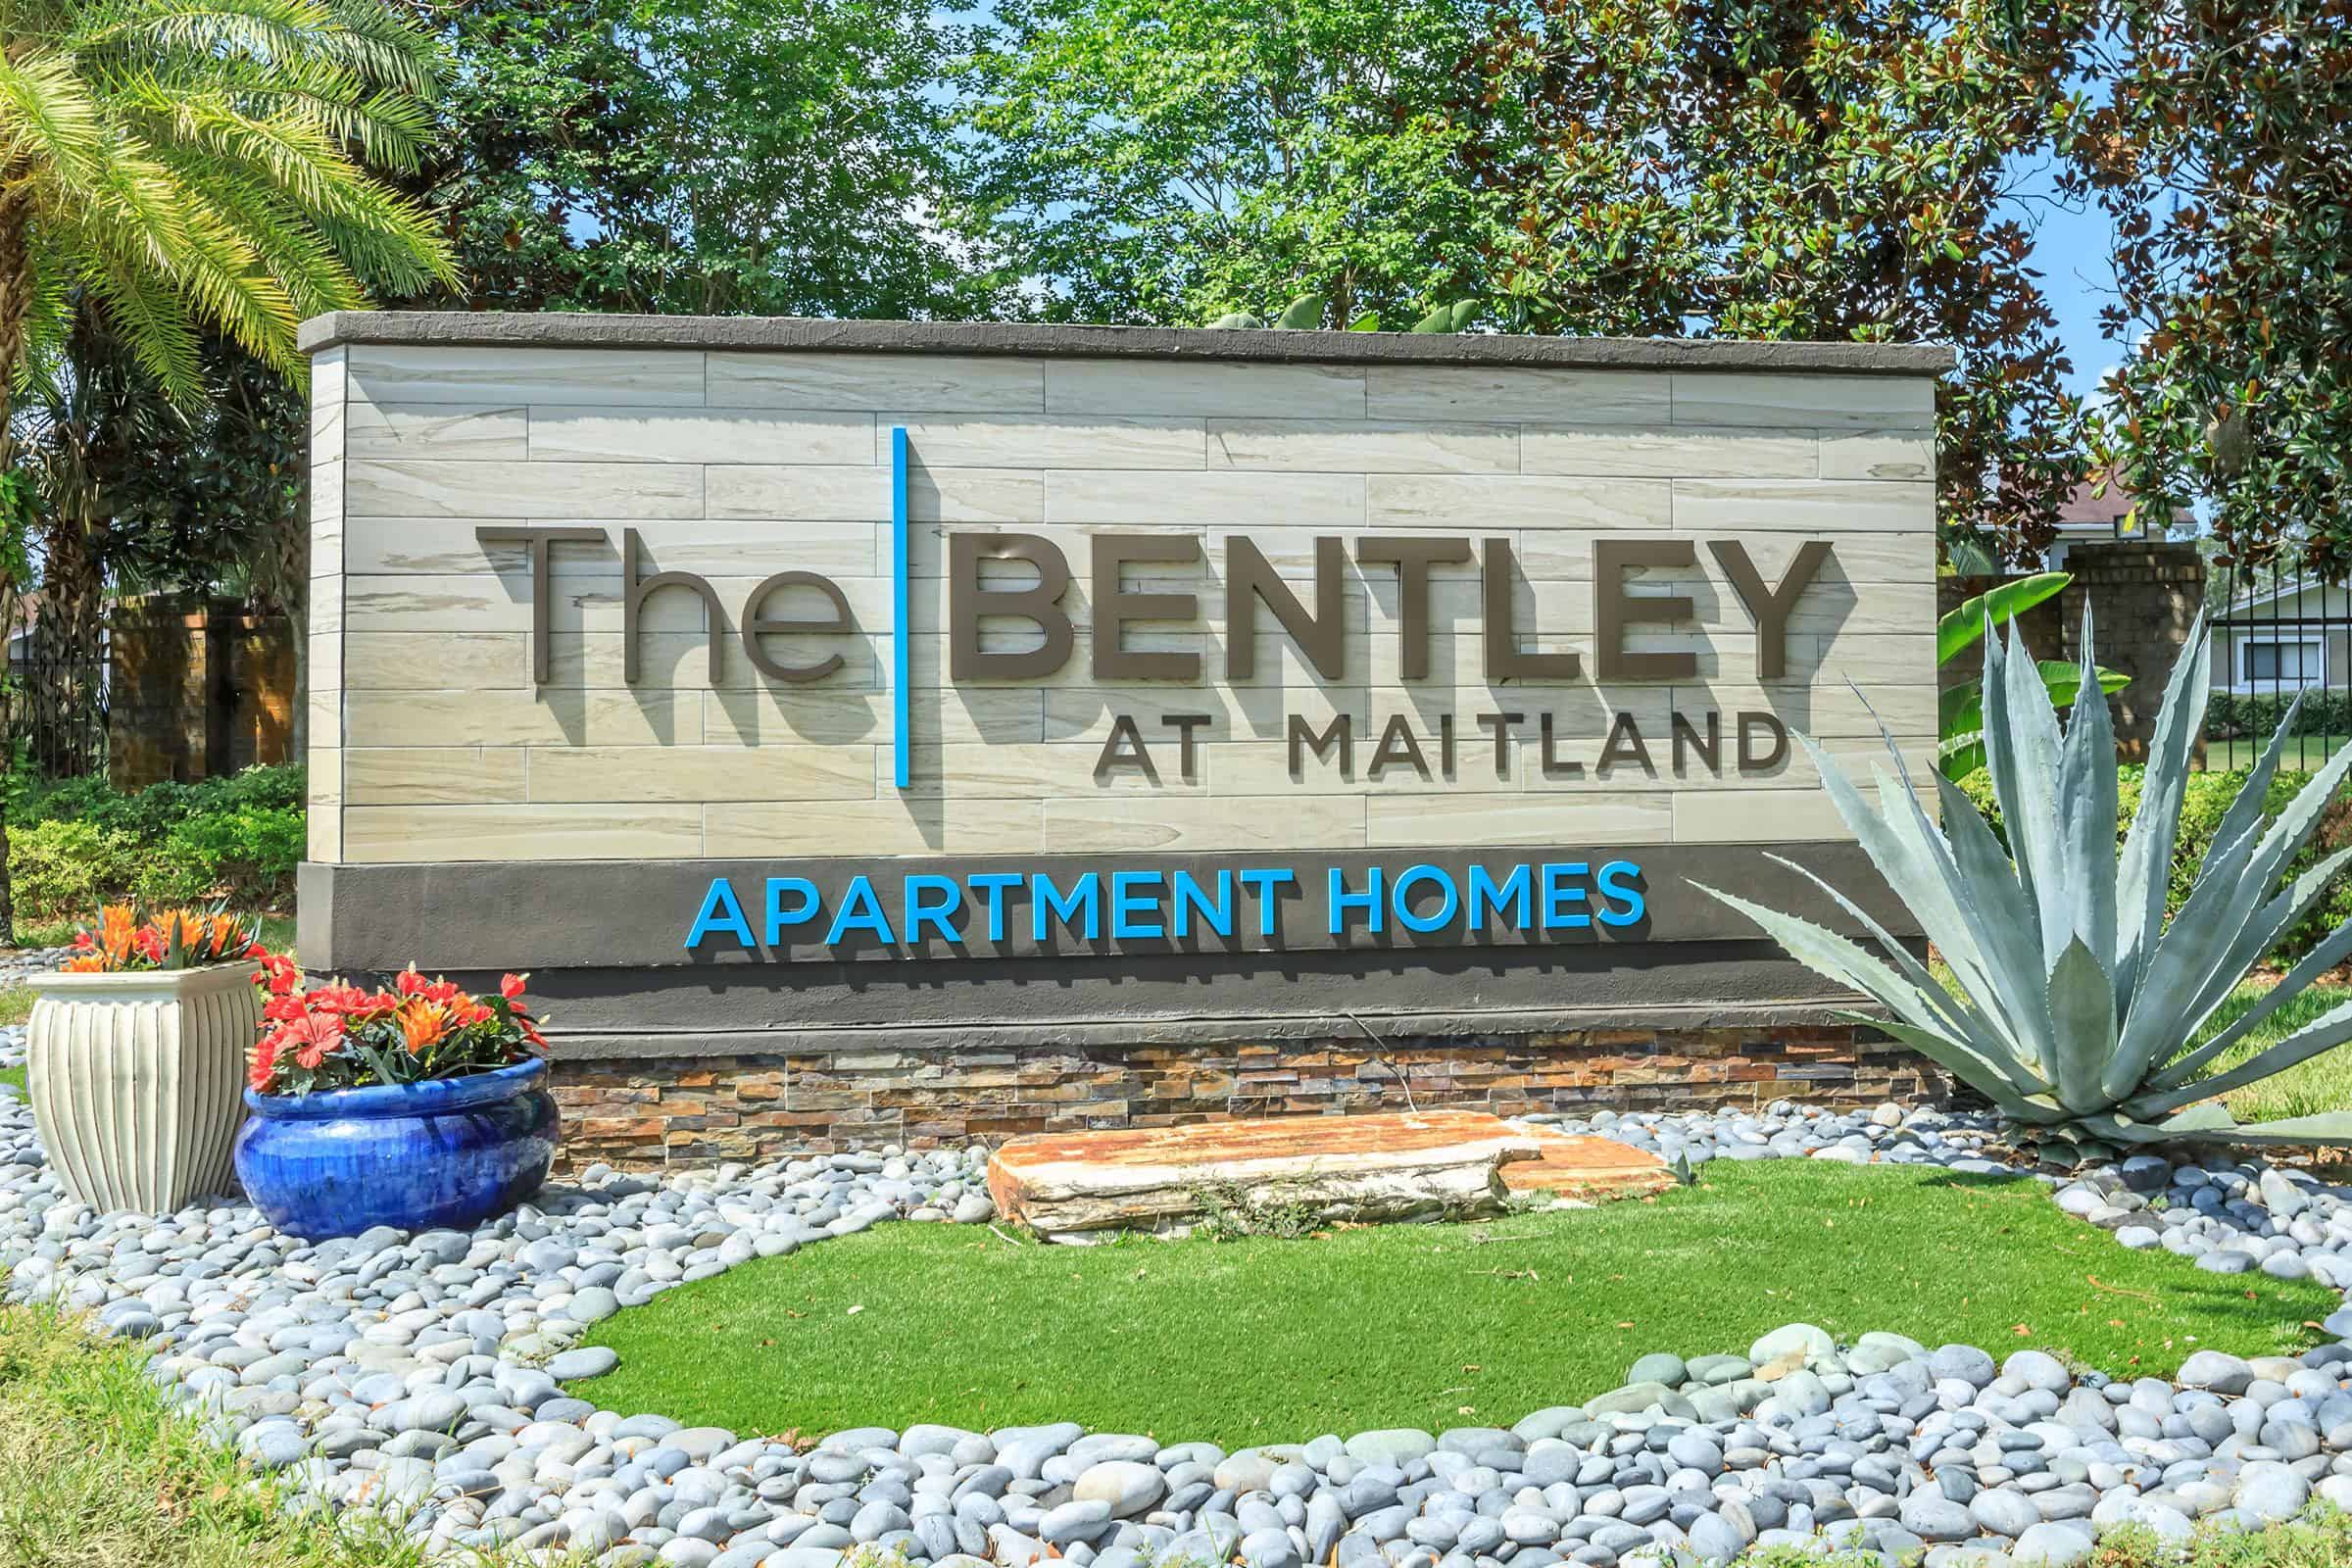 Bentley at Maitland, Multifamily, Investment Property, Real Estate Fund, Landrock, Landrock LP, WHIREP, WHI Real Estate Partners